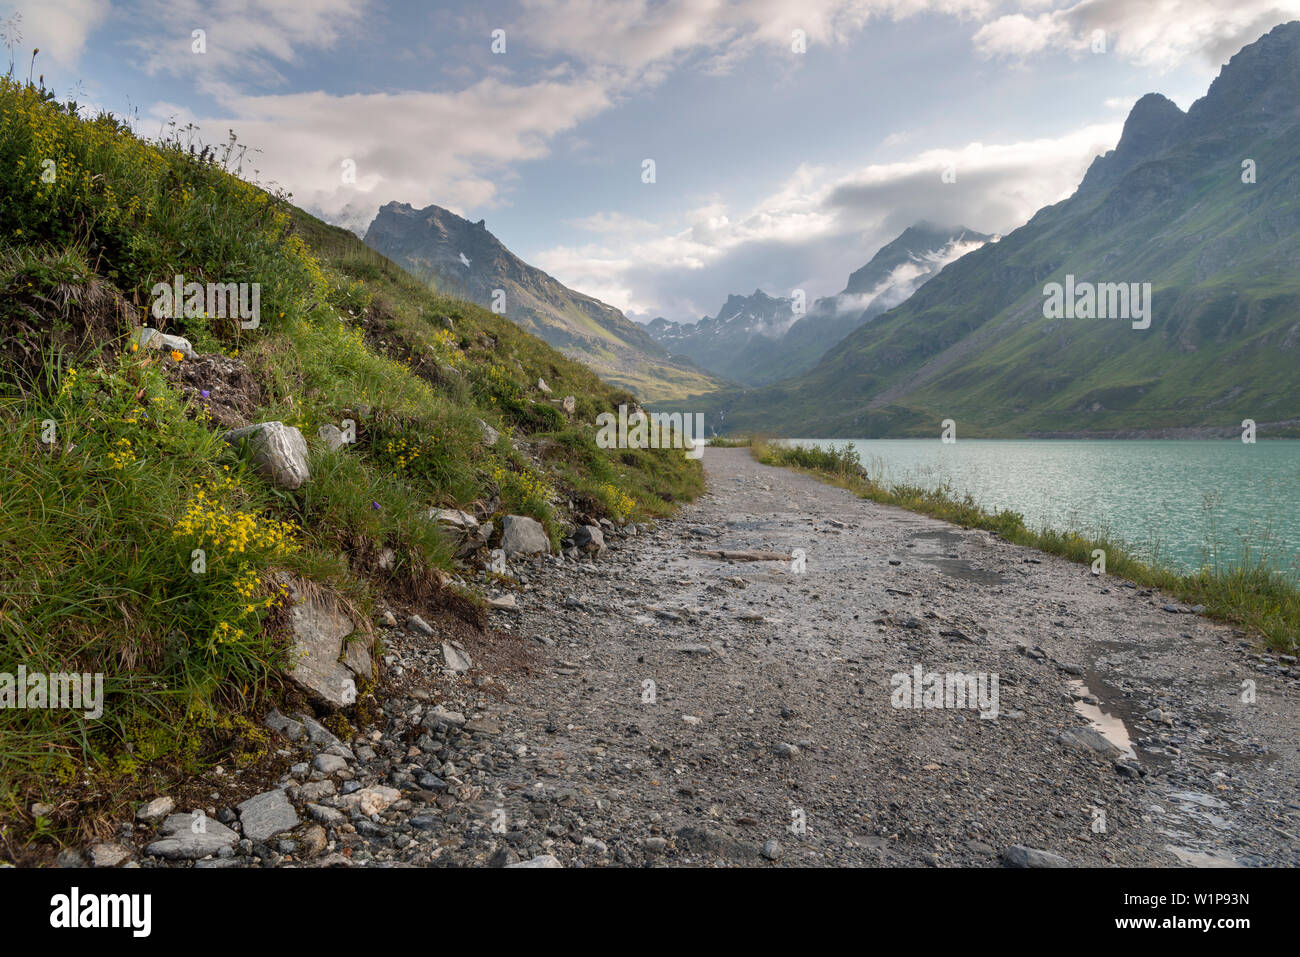 Lake Silvrettasee, footpath, Mt. Lobspitze, cloud, rain, Bludenz, Vorarlberg, Austria, Europe Stock Photo